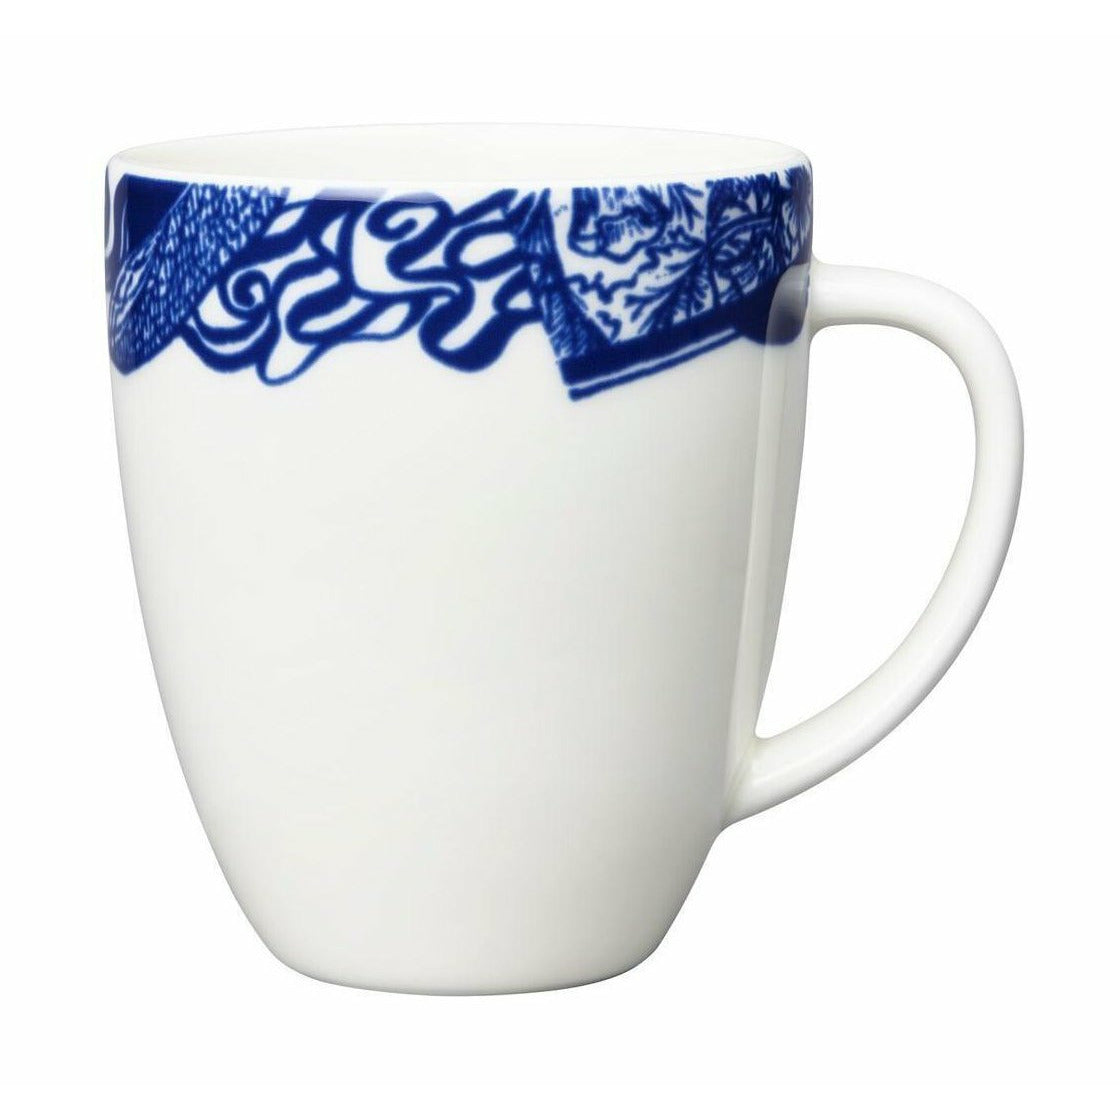 Arabia Pastoraali Vase 13 Cm, Weiß/Blau